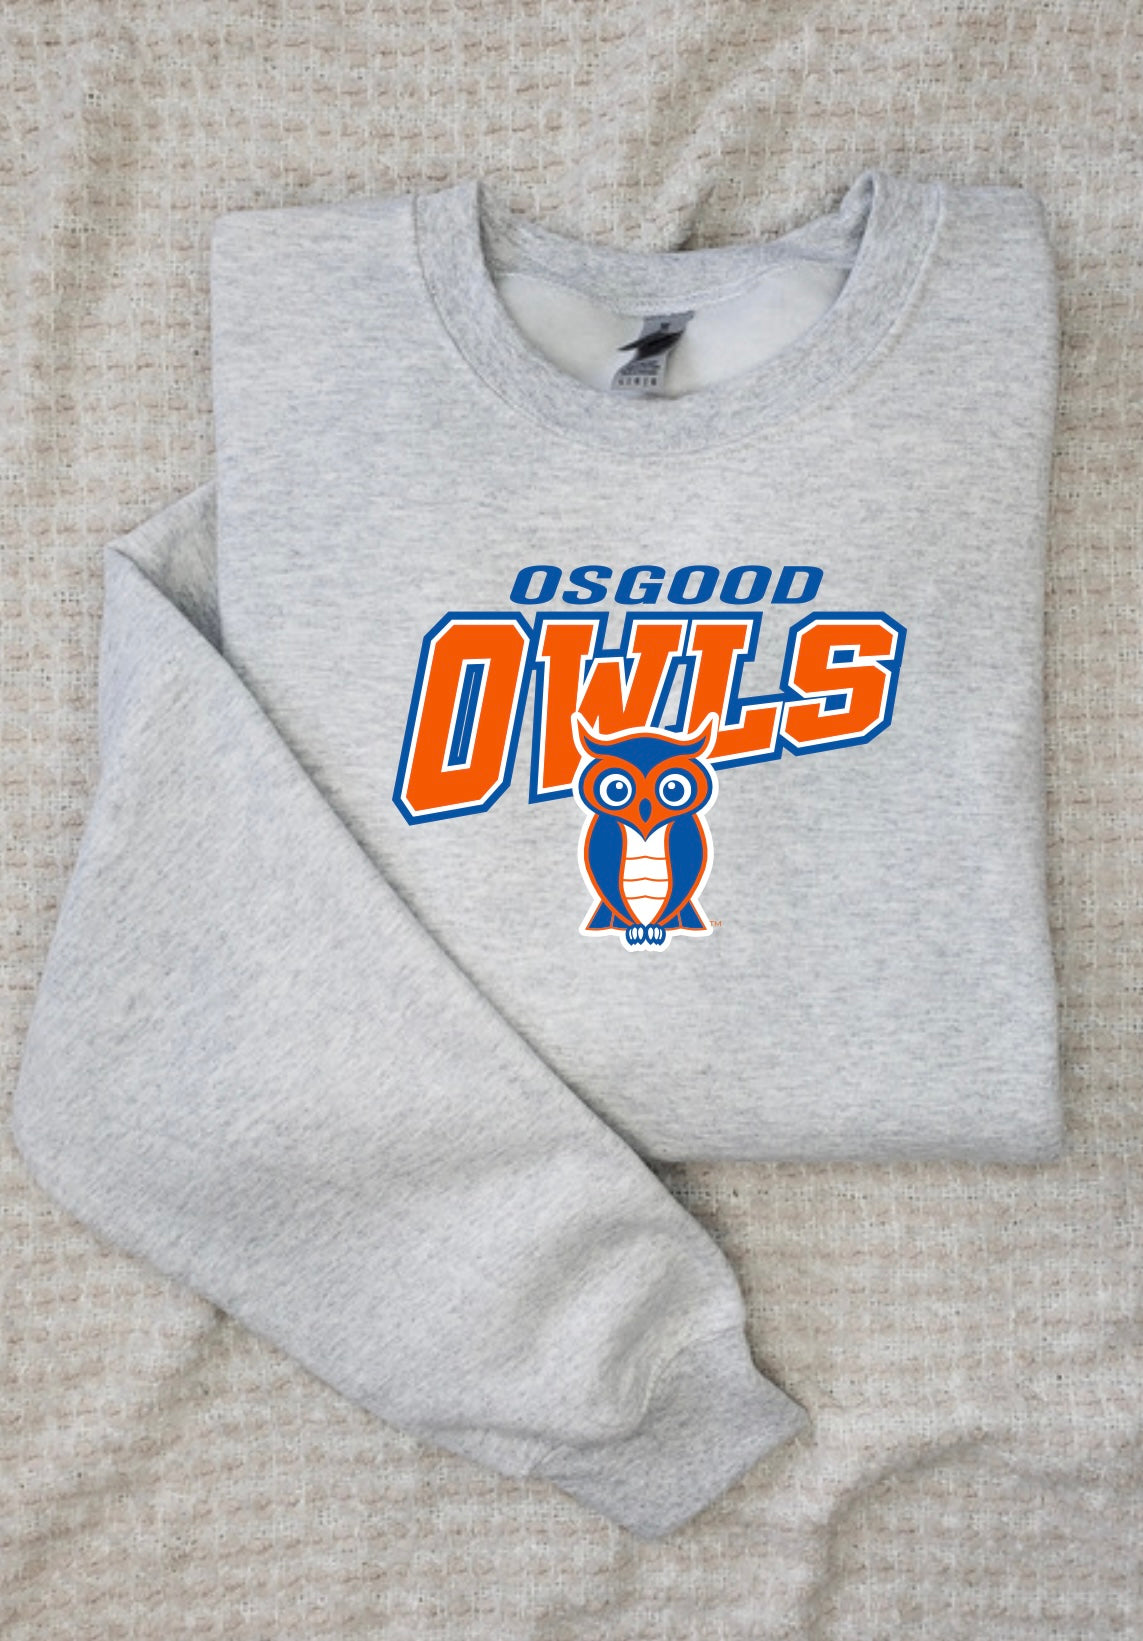 Osgood Owls Crew Sweatshirt